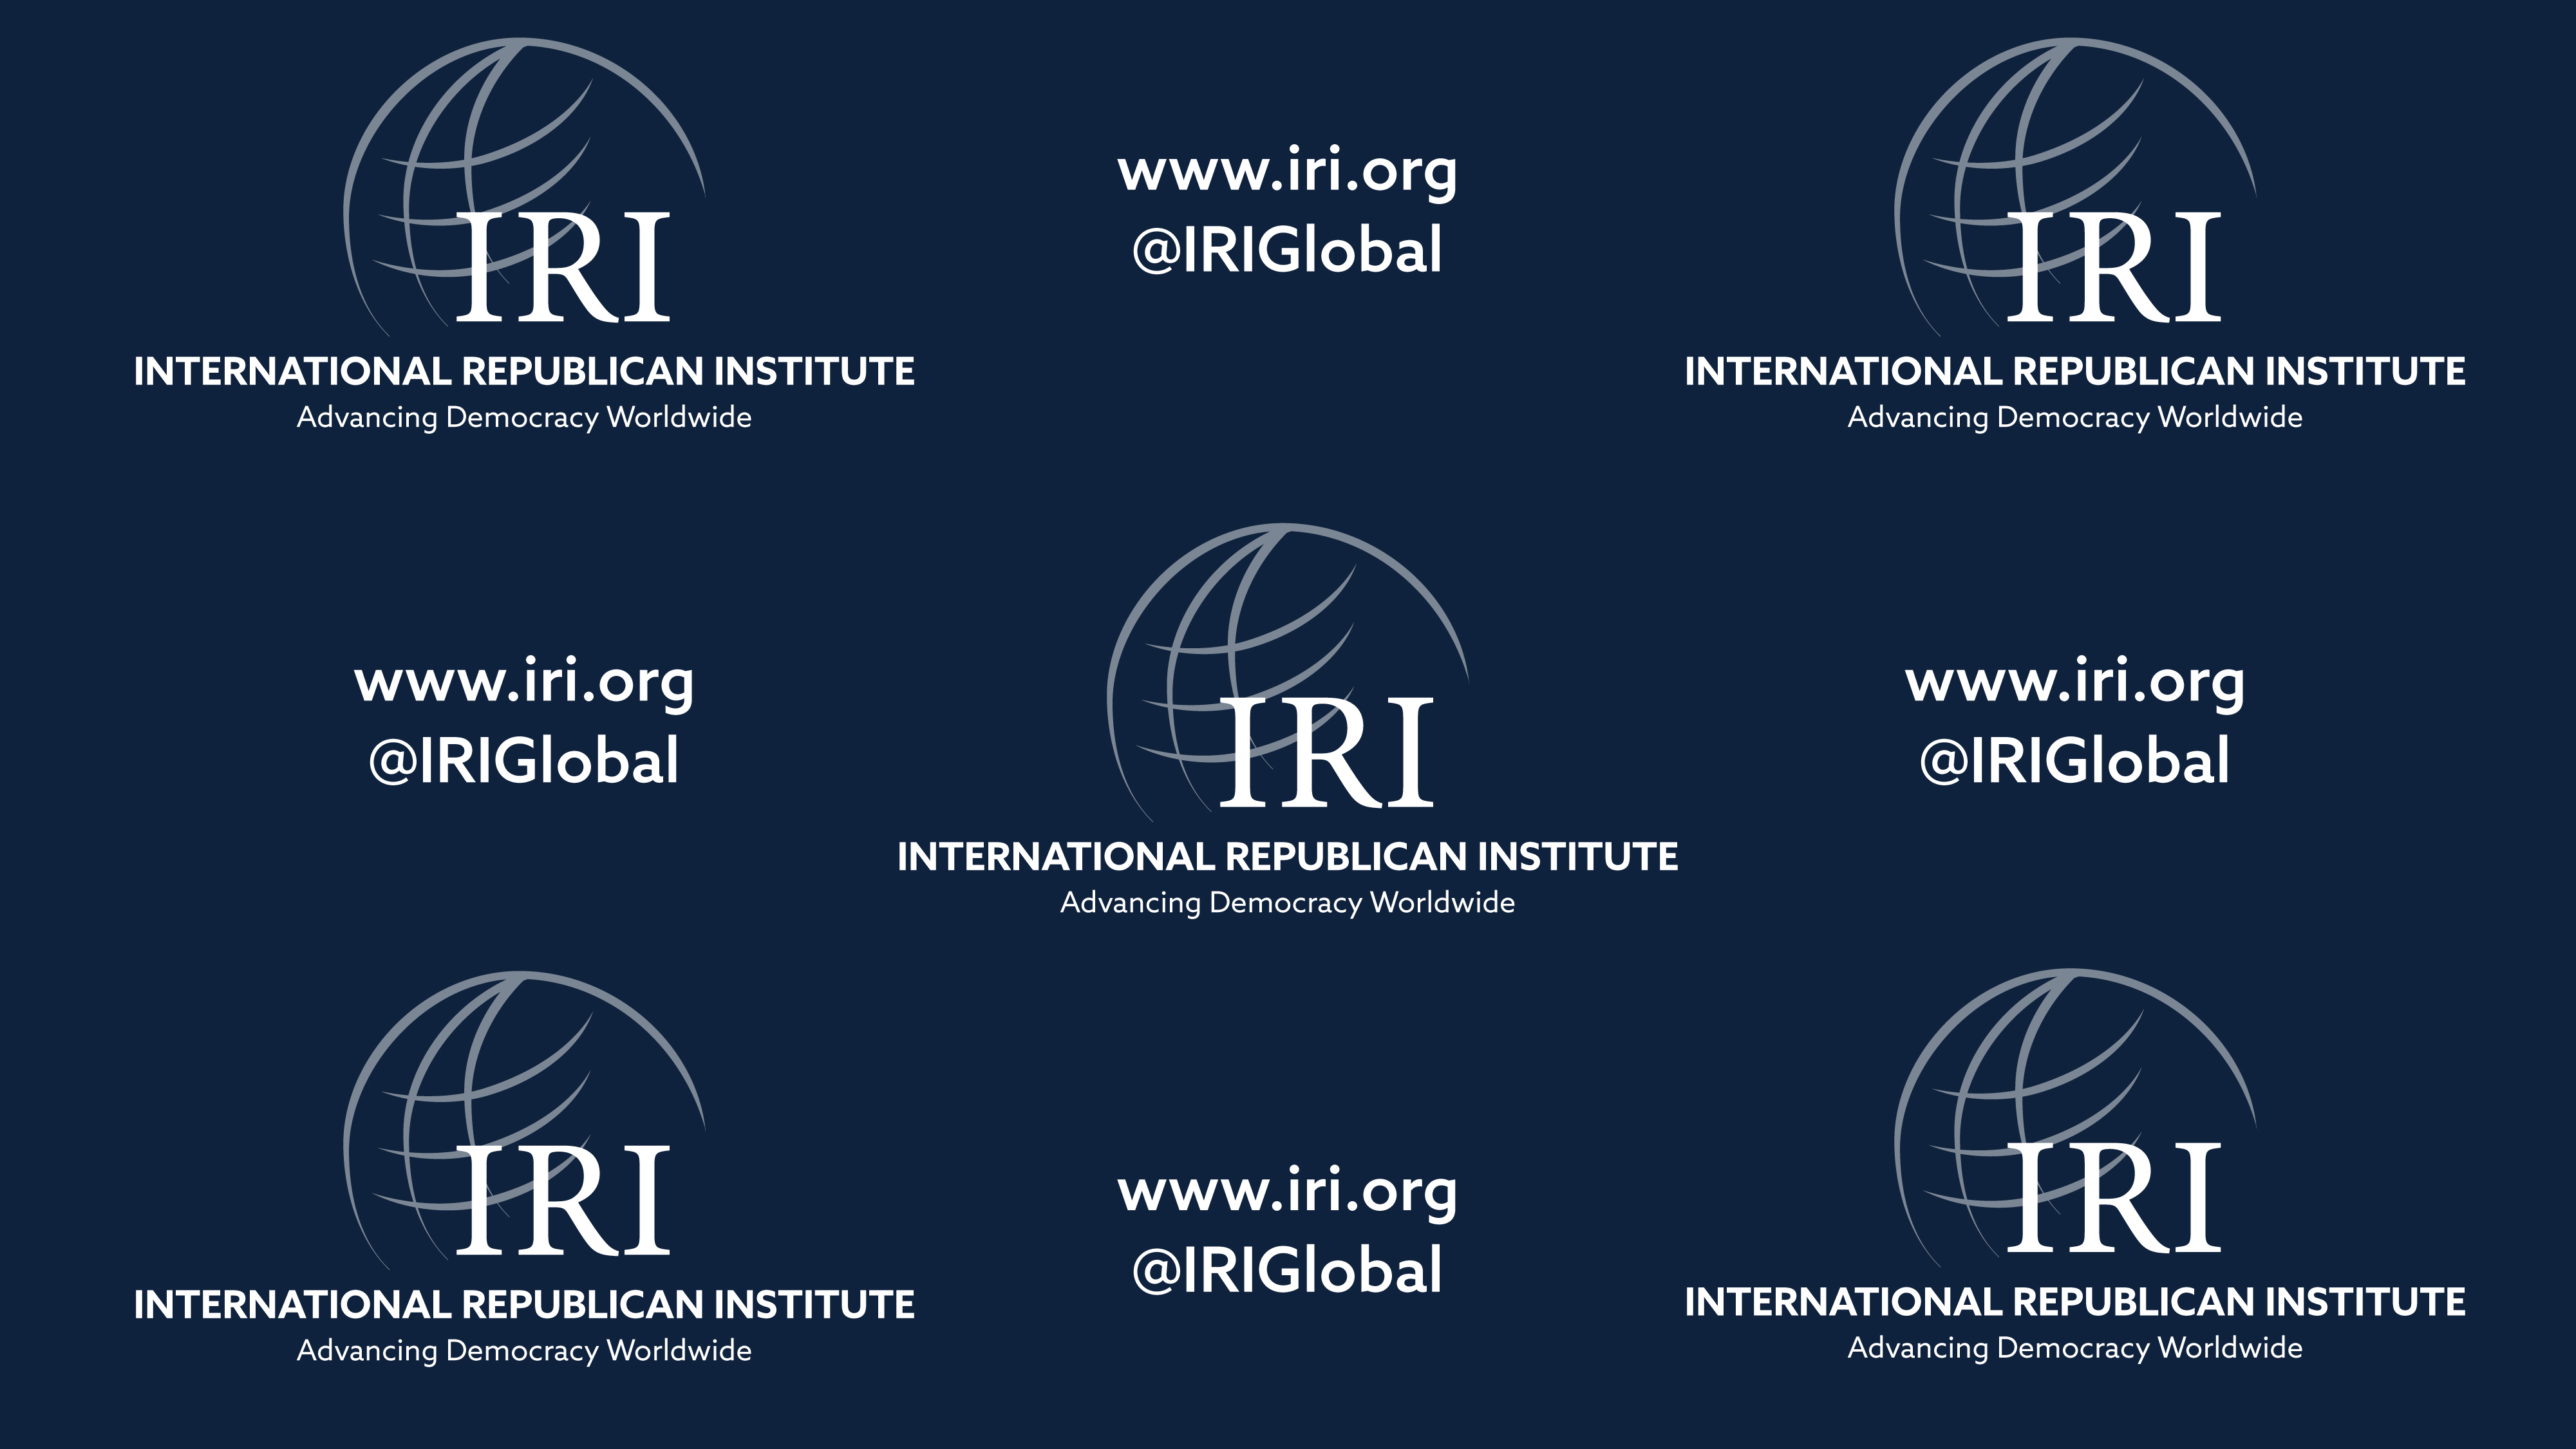 IRI Logo, iri.org, IRIGlobal on Twitter